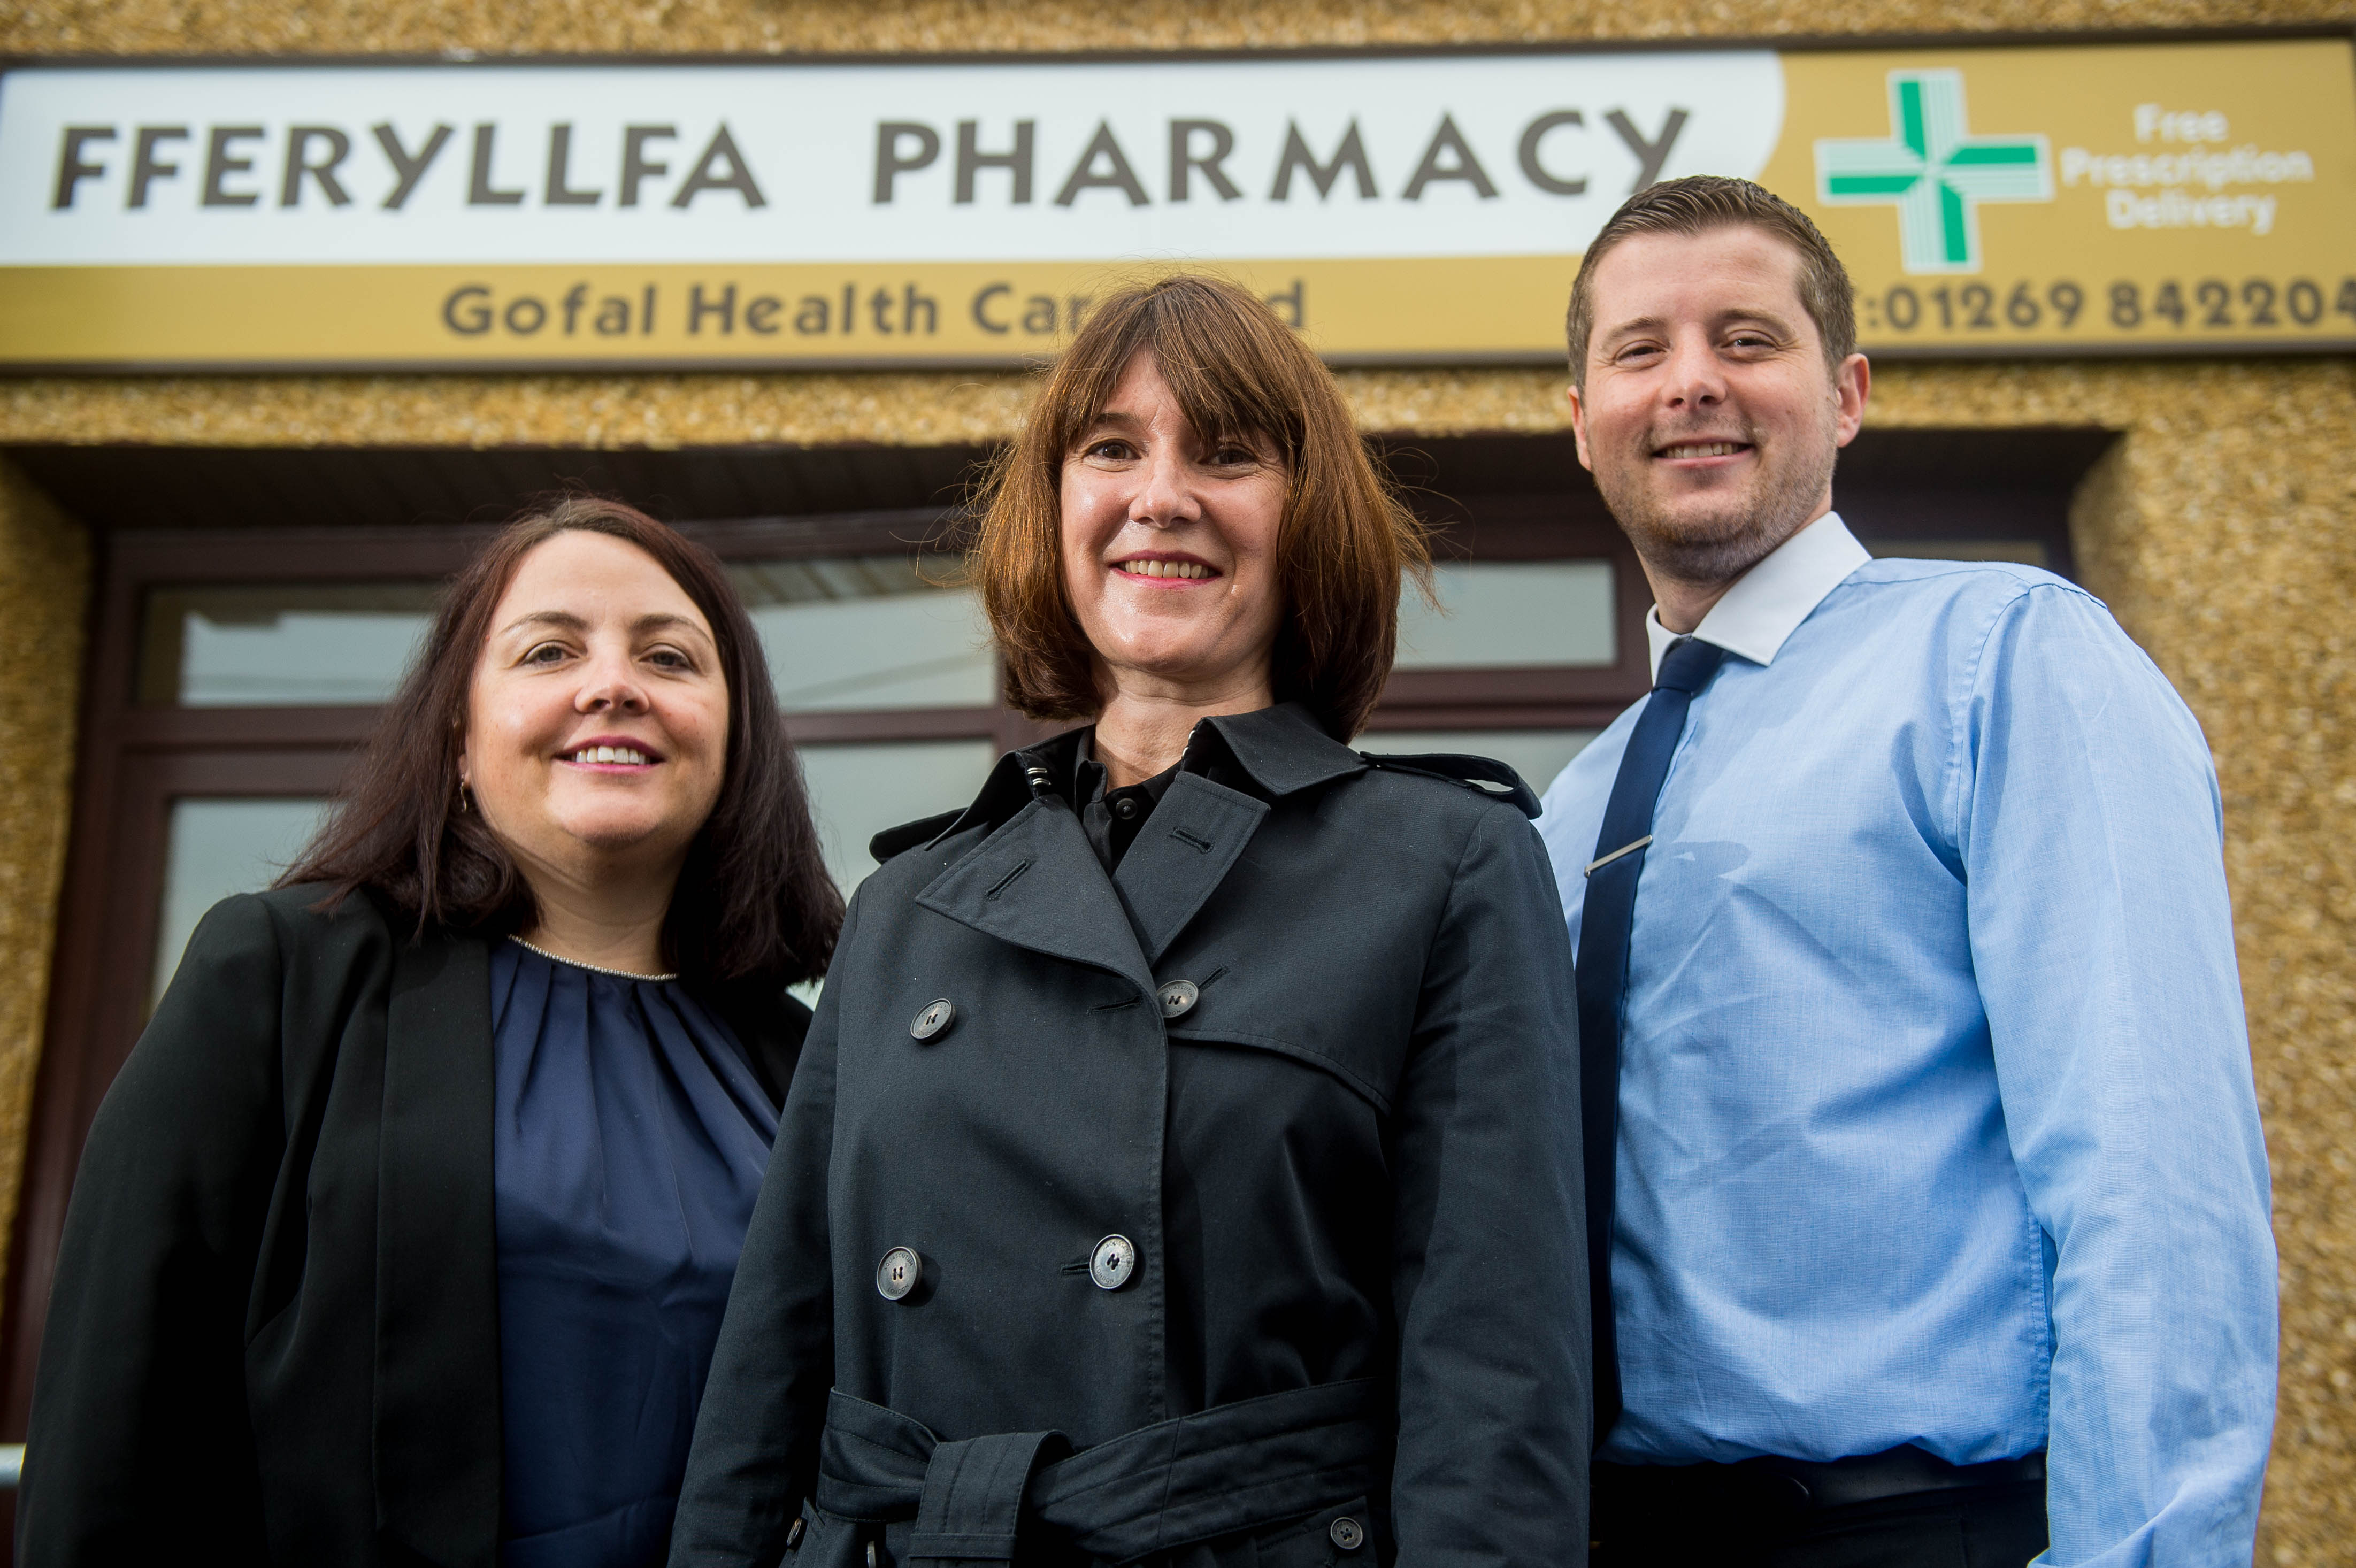 Penny Griffiths (Fferylla Pharmacy), Betsan Powell (JCP Solicitors) and Gareth Harlow (Fferylla Pharmacy)